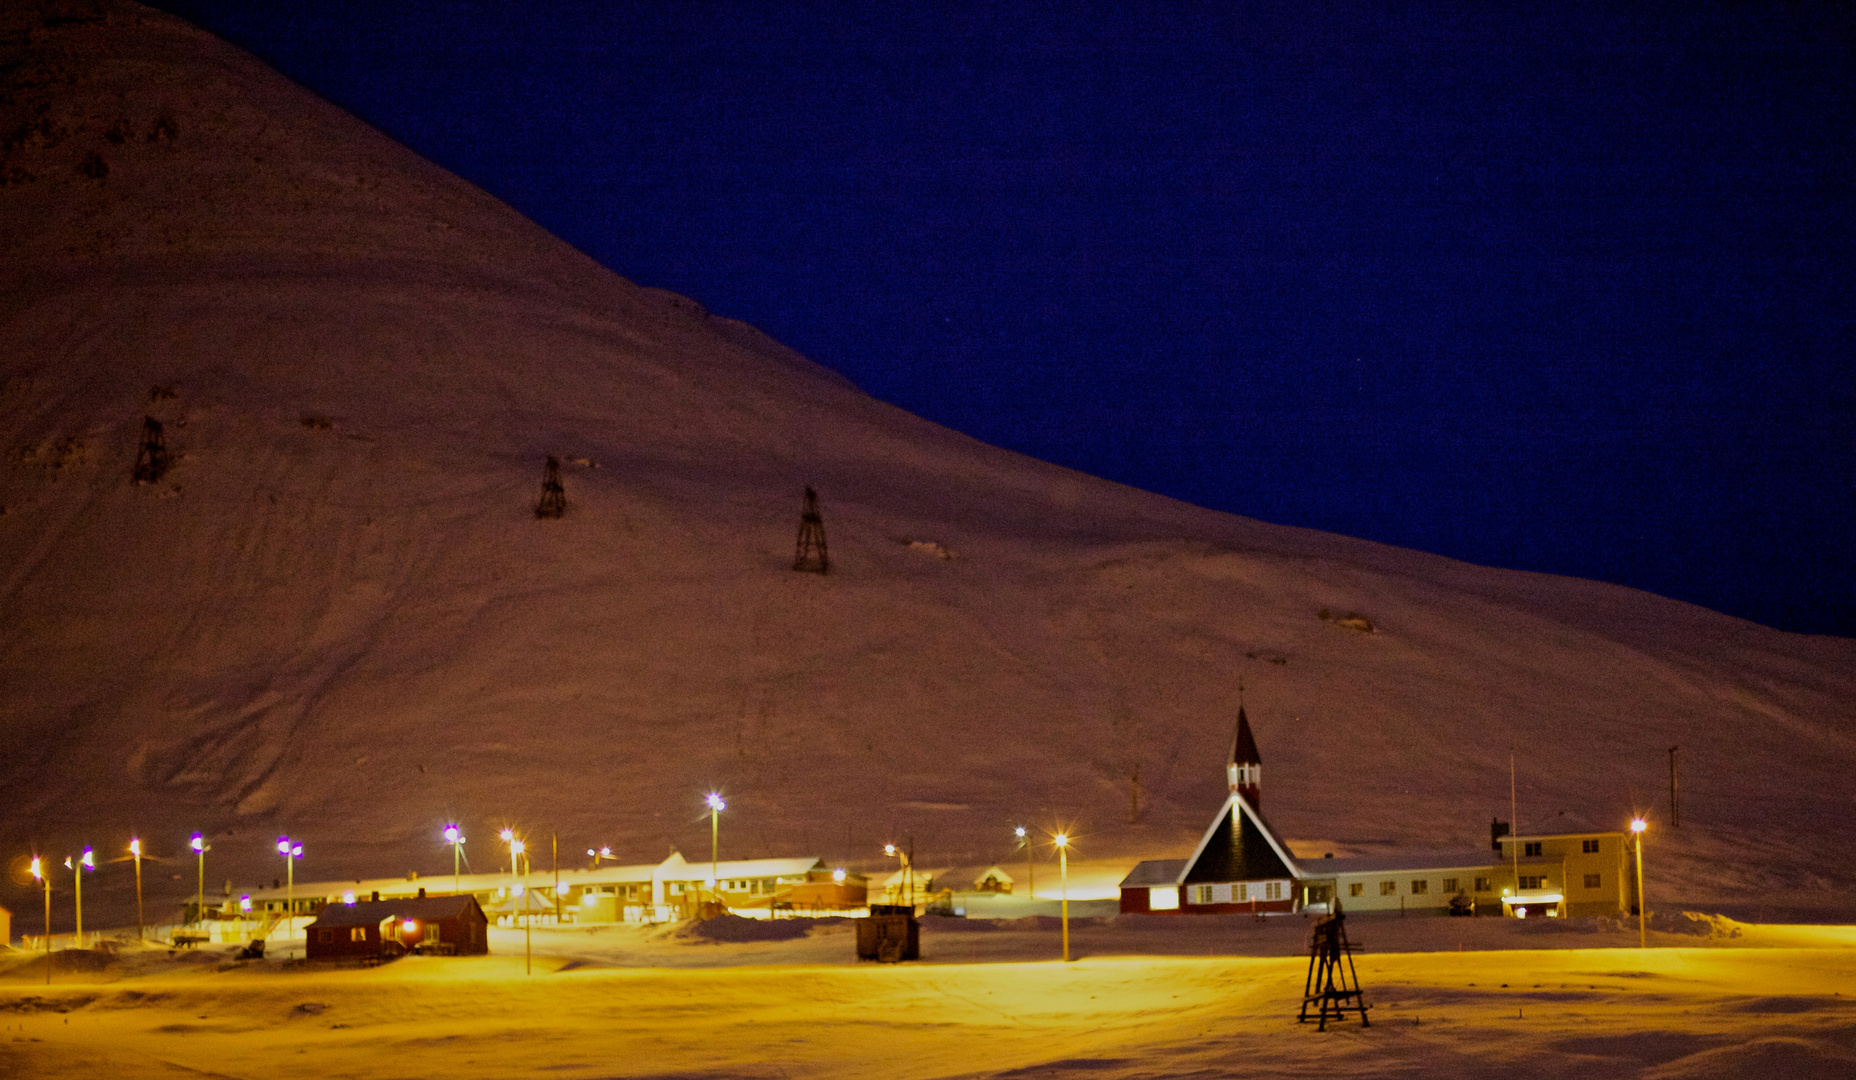 Polarnacht, Spitzbergen, Longyearbyen 78°N